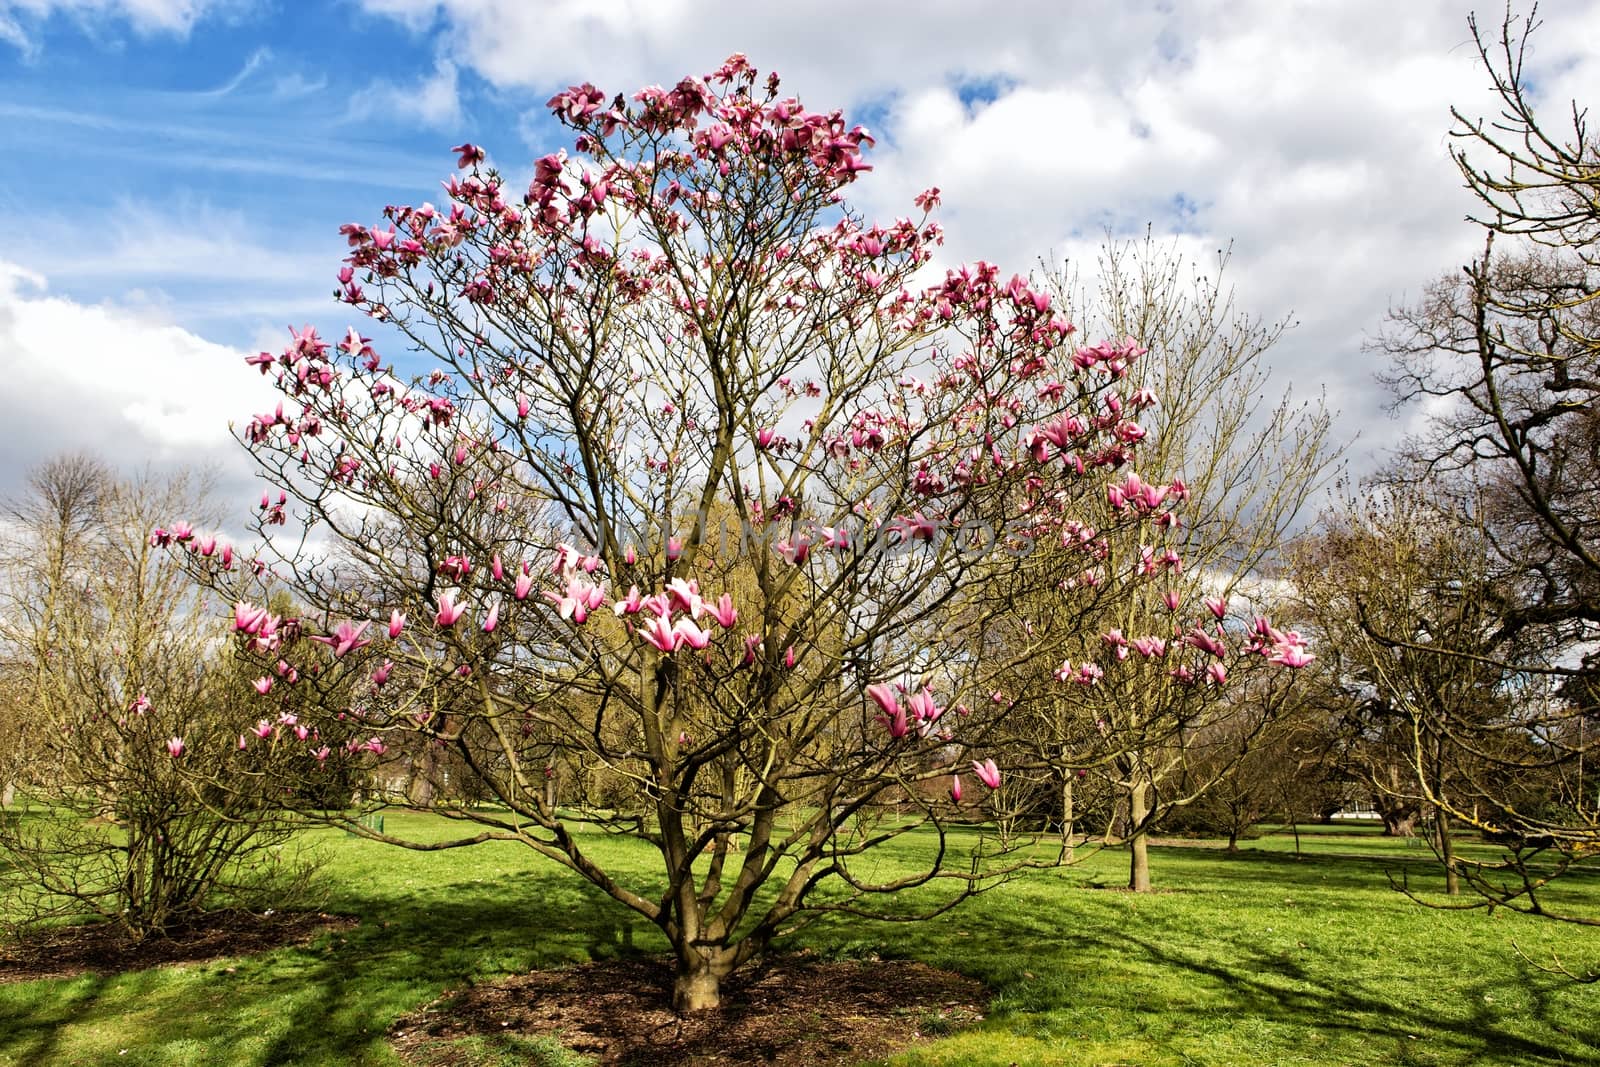 Magnolia tree in Kew gardens, London by mitakag